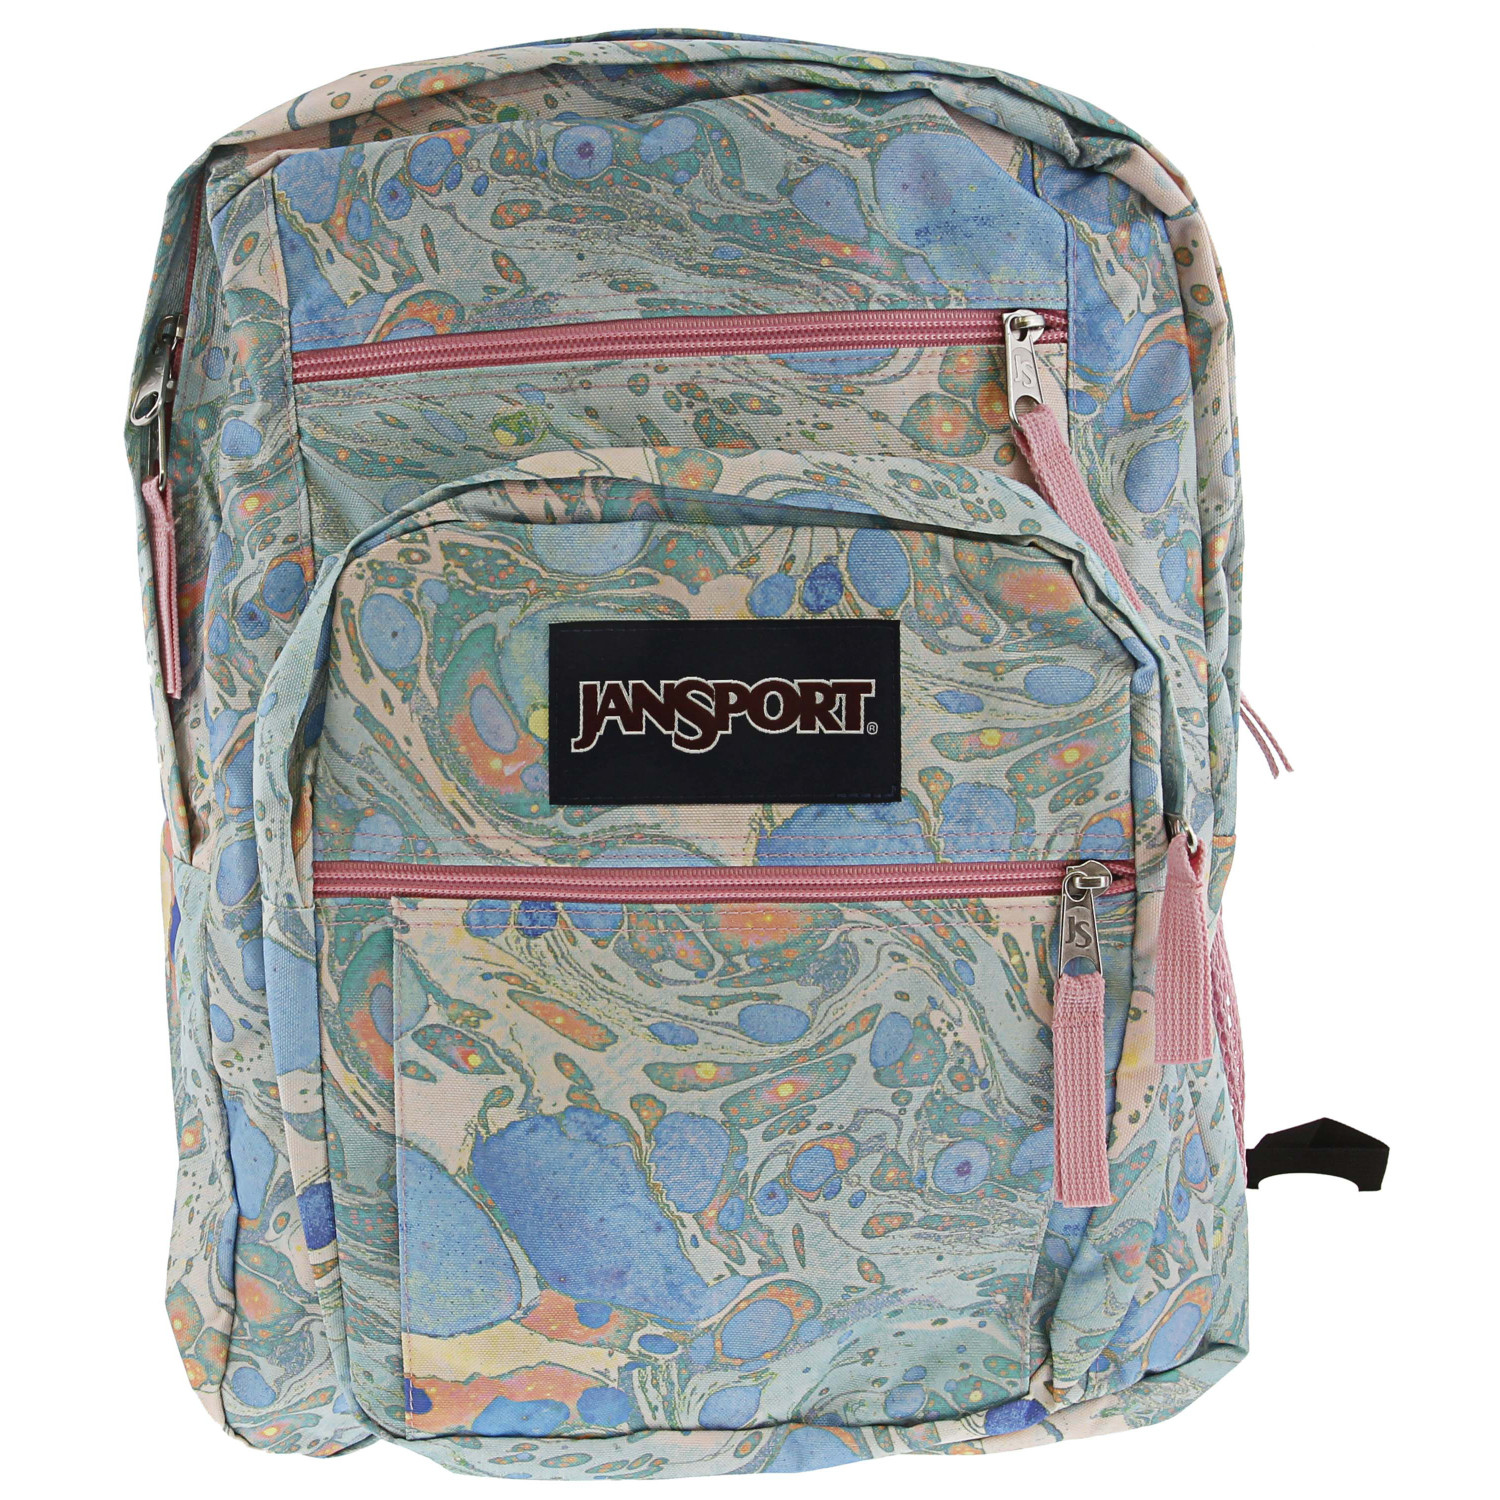 JanSport Big Student Polyester Backpack - Pastel Marble - image 1 of 3